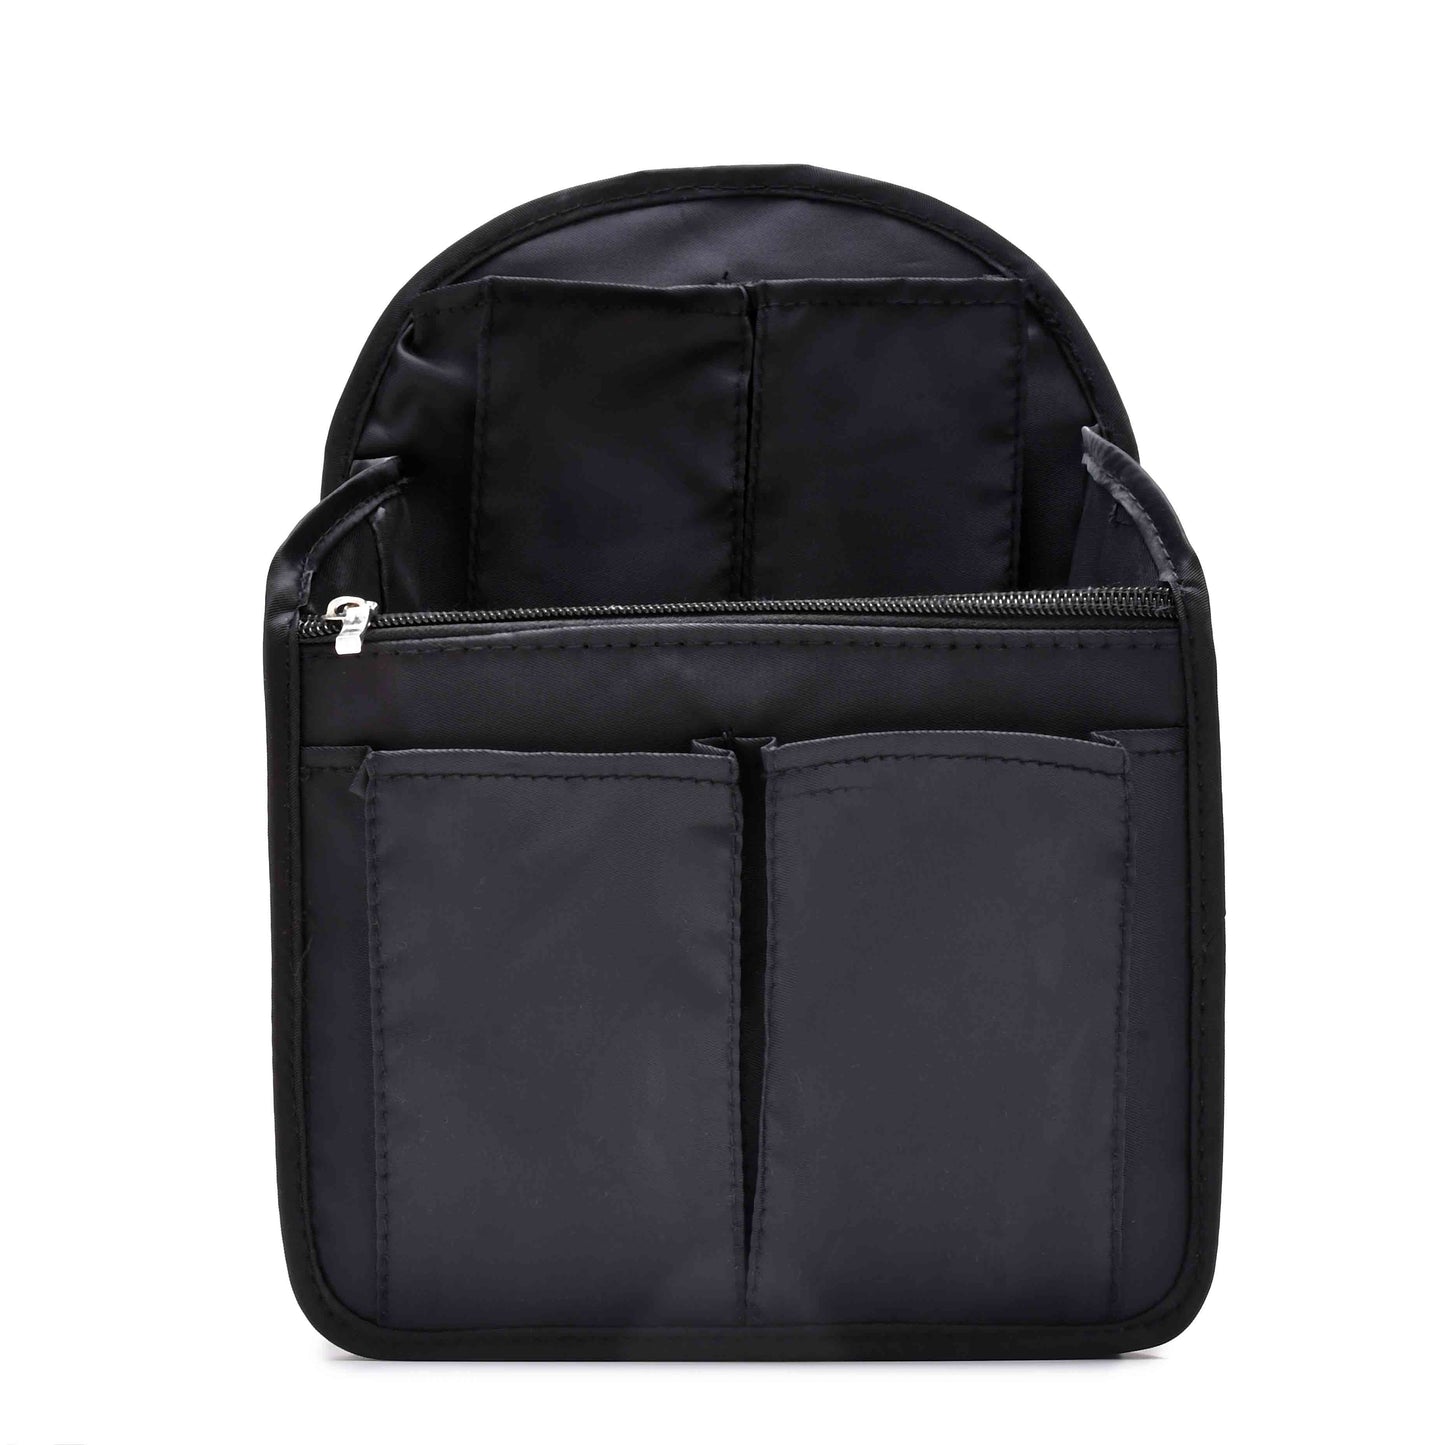 Backpack liner Organizer Insert Bag in Bag Compartment sorting bag Travel Handbag Storage Finishing package Travel accessories